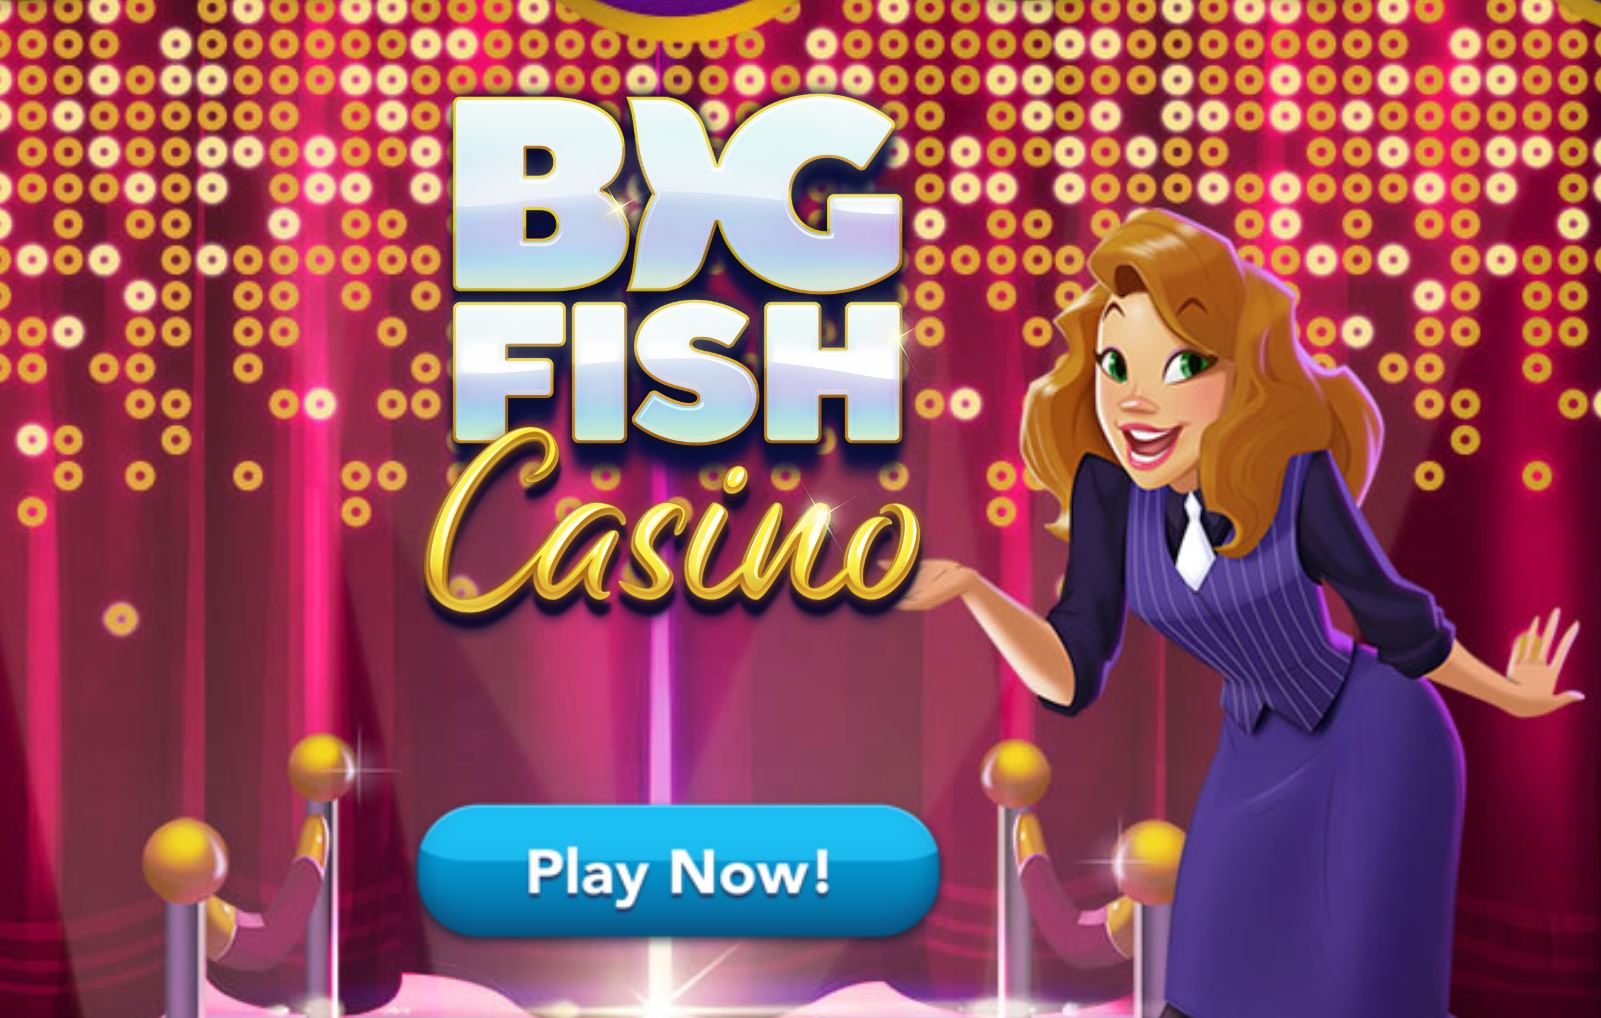 https://www.channelnews.com.au/wp-content/uploads/2020/05/Big-Fish-Casino.jpg